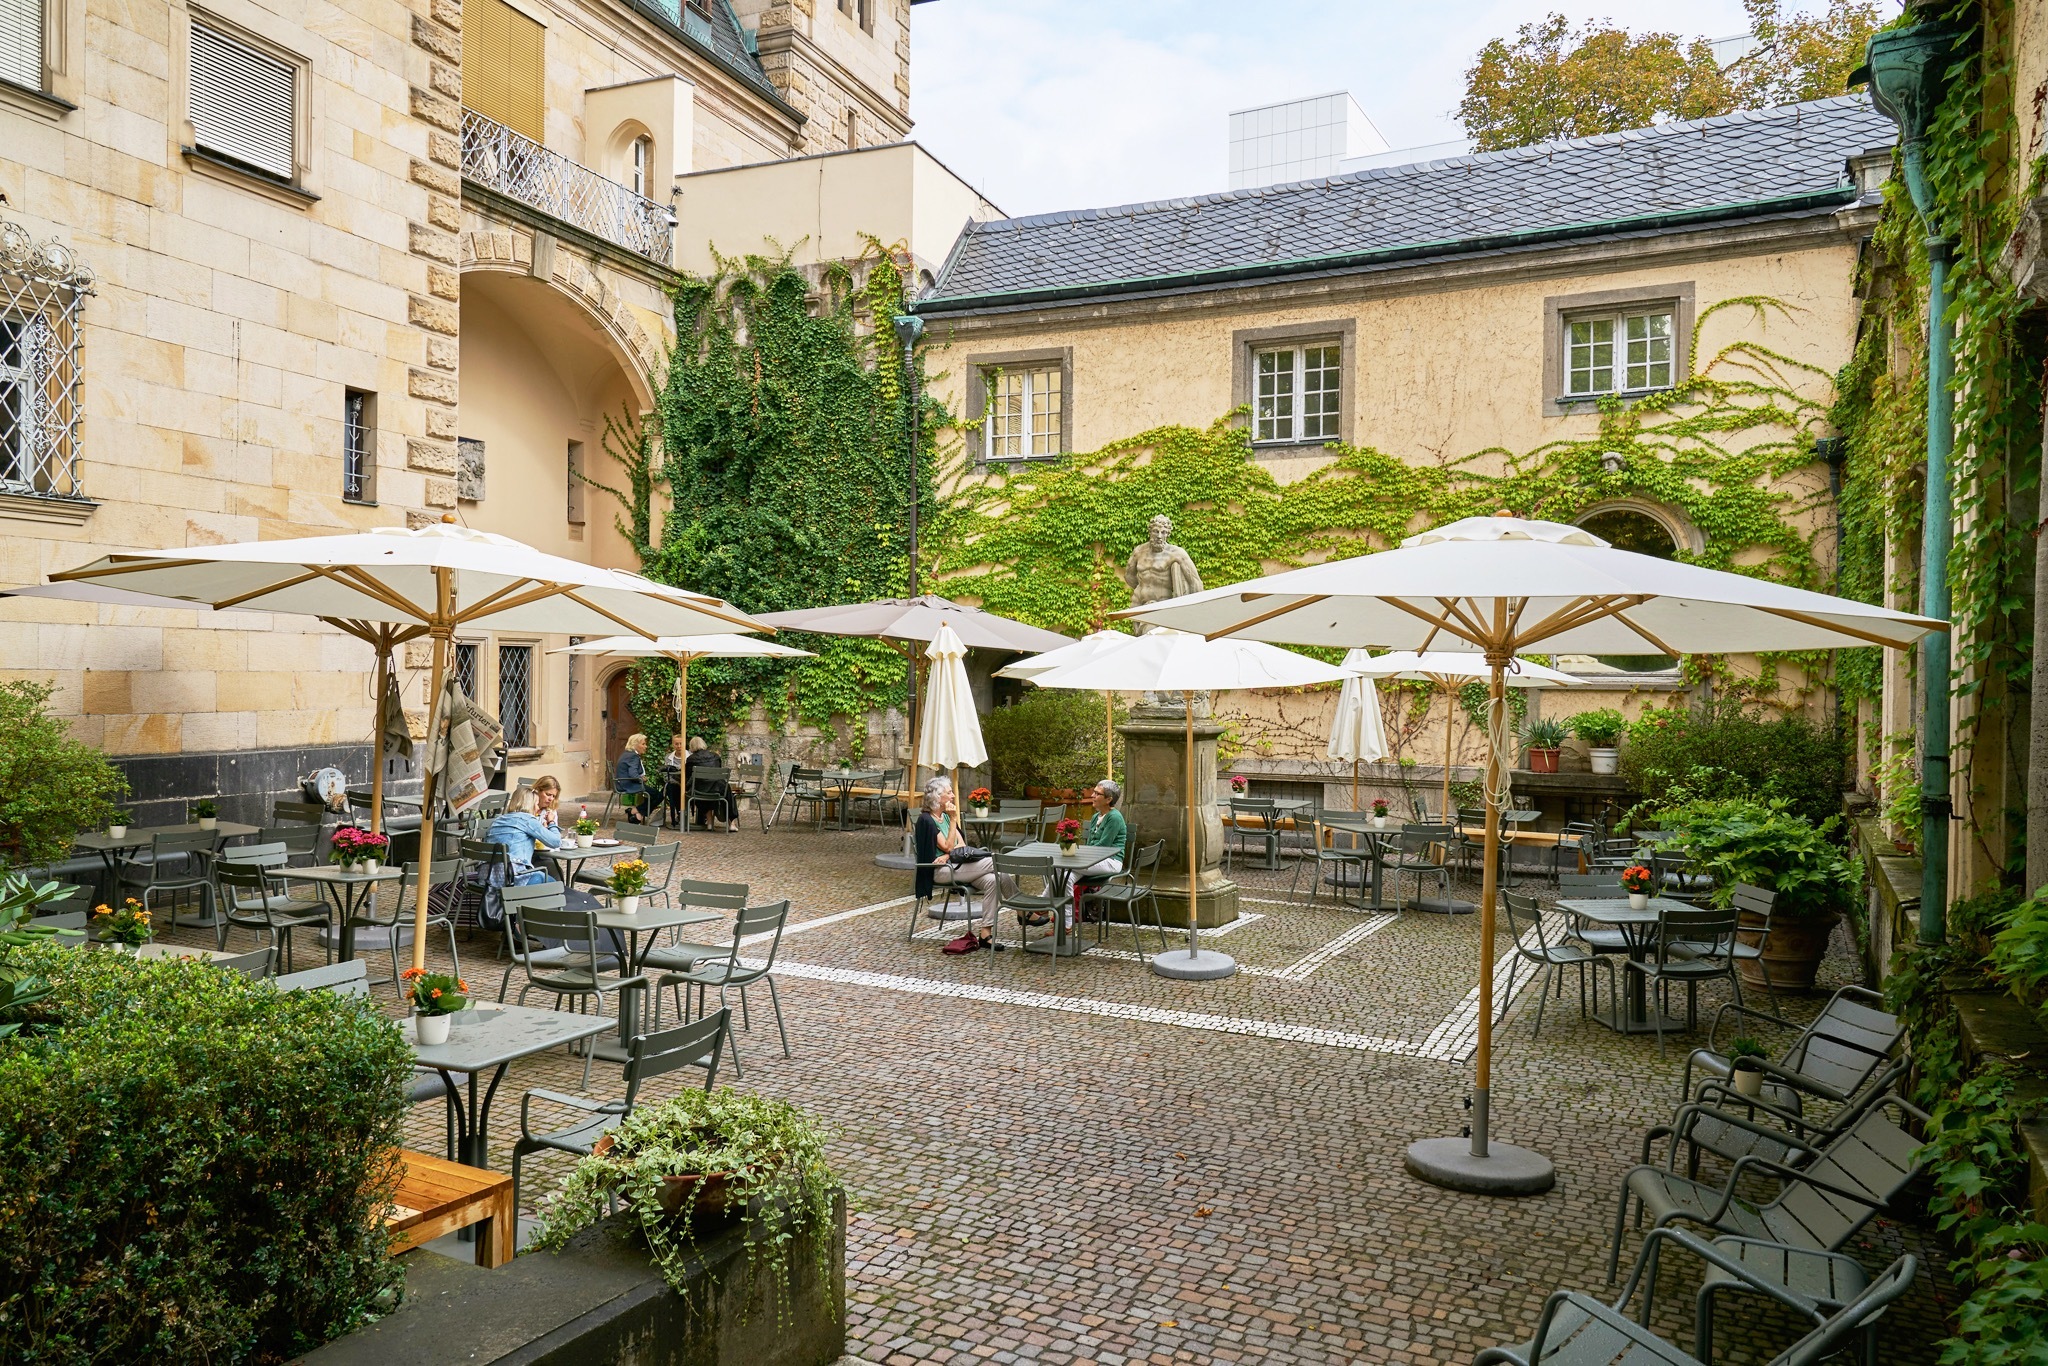 Geheimtipp: Das Café im Garten des Liebieghauses lädt zum Verweilen ein., Credit: © Liebieghaus Skulpturensammlung